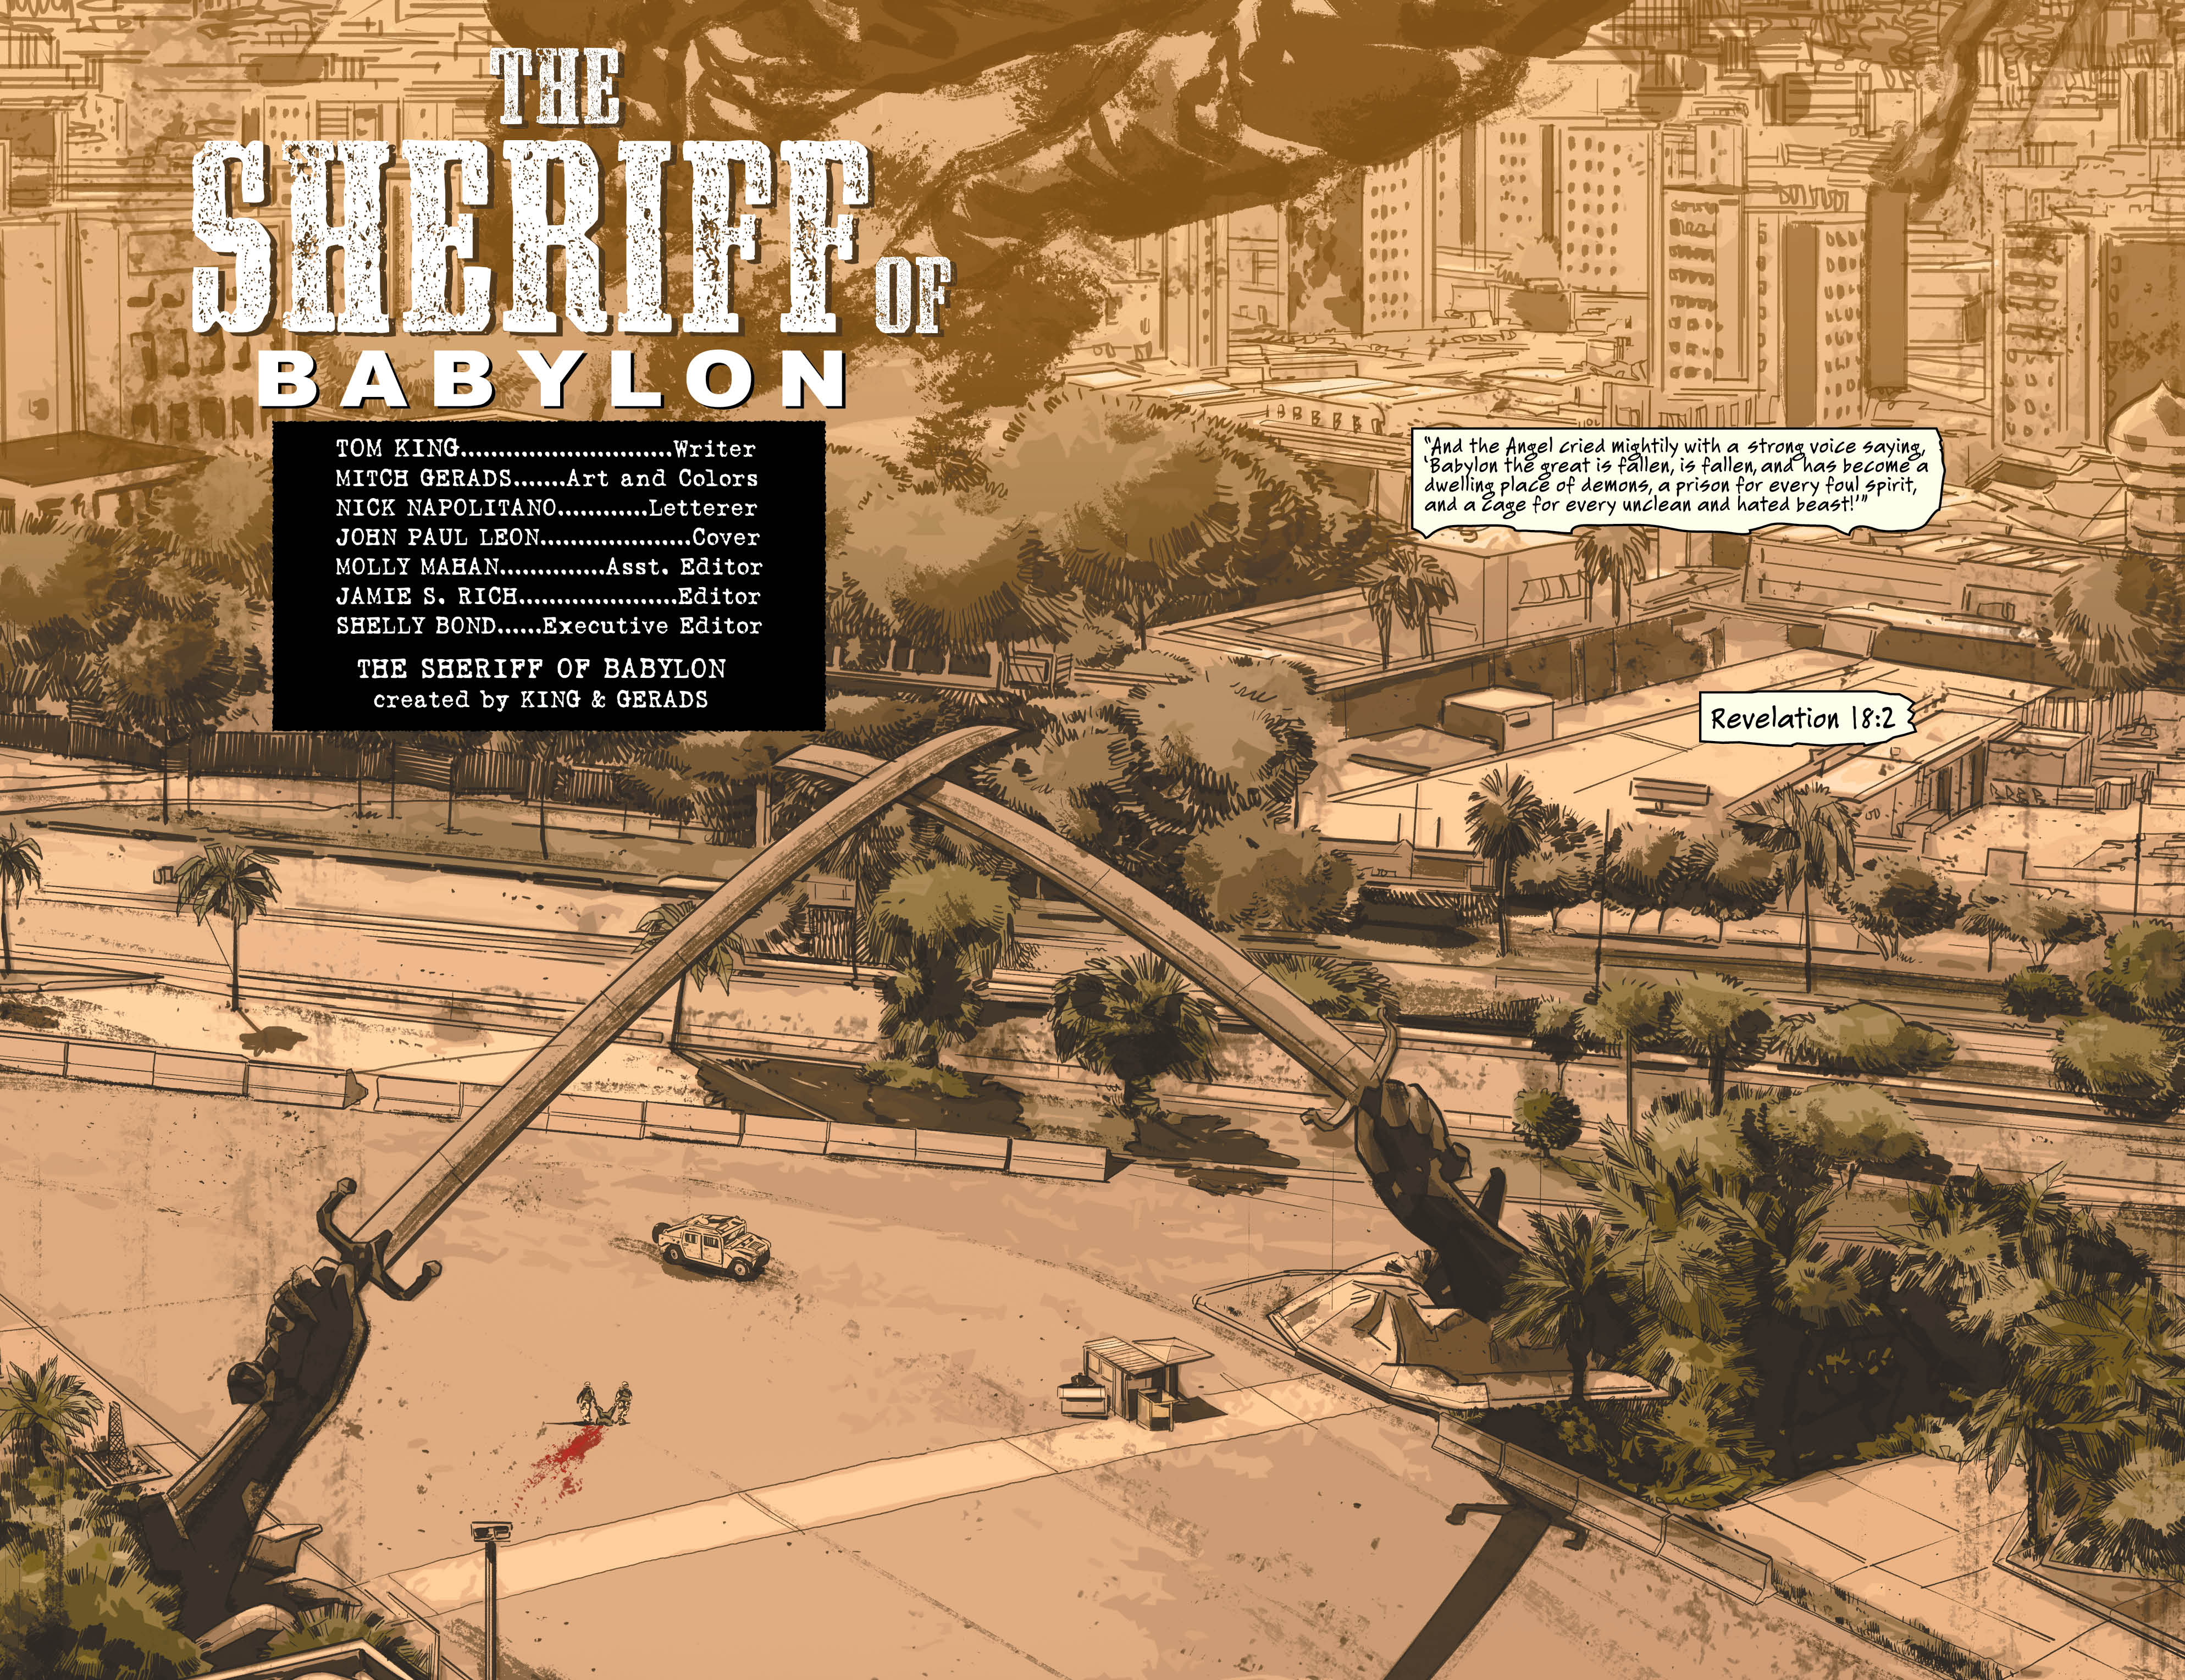 The splash page to the Sherrif of Babylon. Look carefully. image via Vertigo Comics